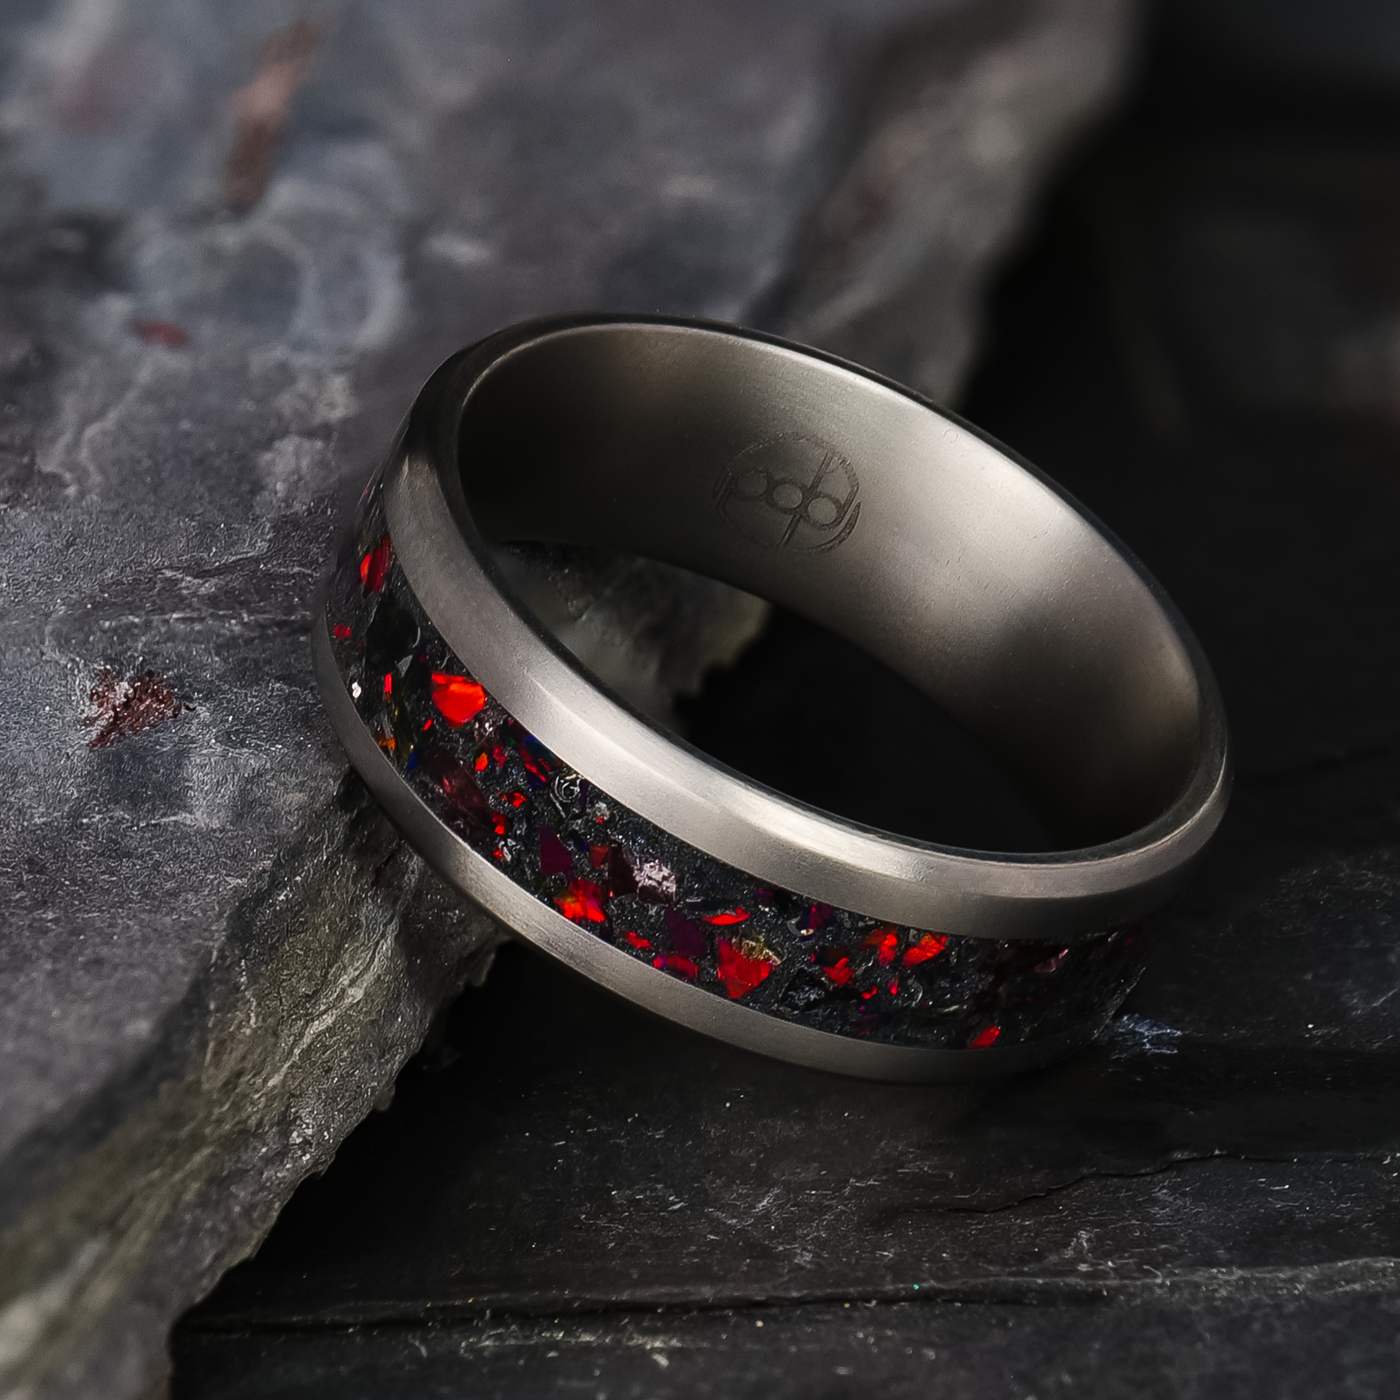 Hellfire Glowstone Ring on Titanium - Patrick Adair Designs